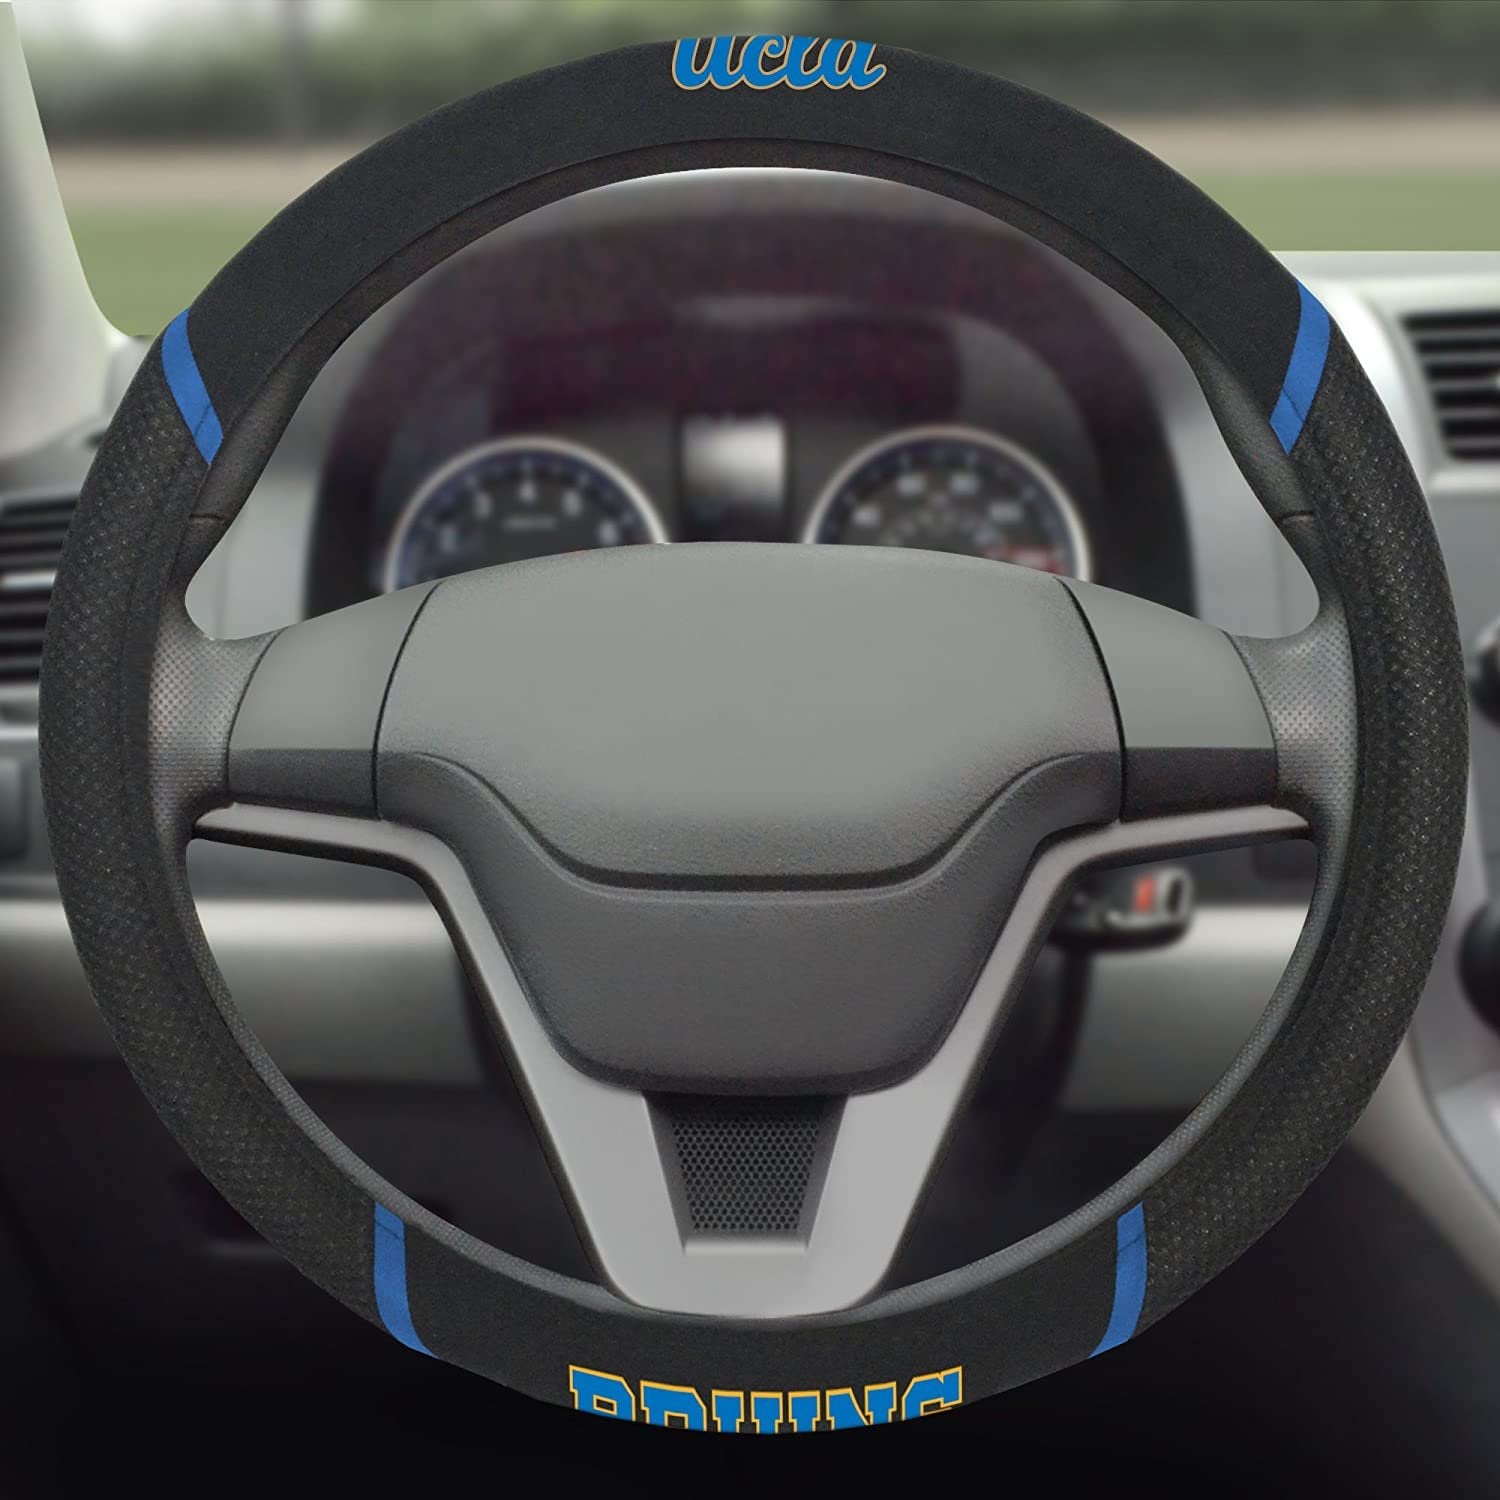 UCLA Bruins Premium 15 Inch Black Emroidered Steering Wheel Cover